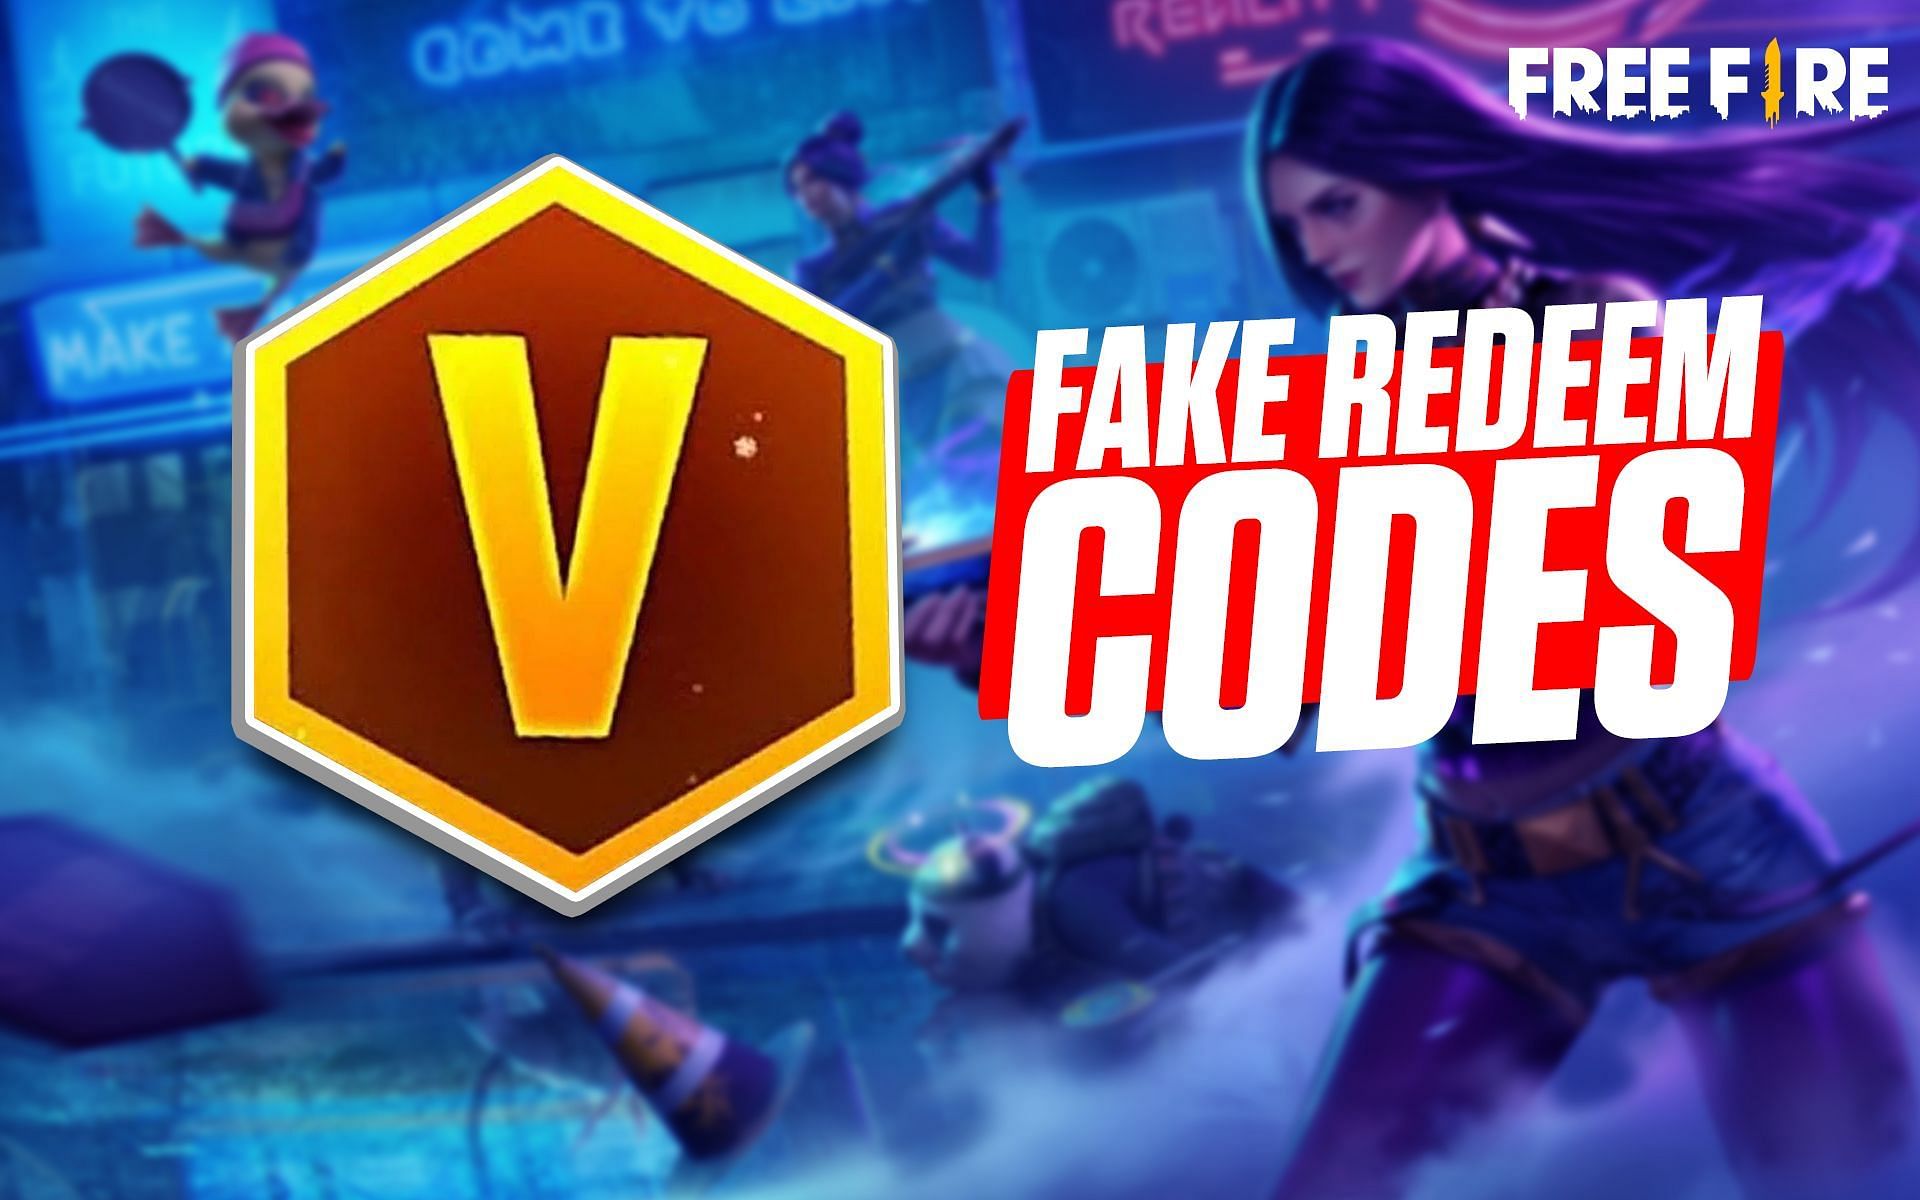 The redeem codes for V Badge are fake (Image via Sportskeeda)